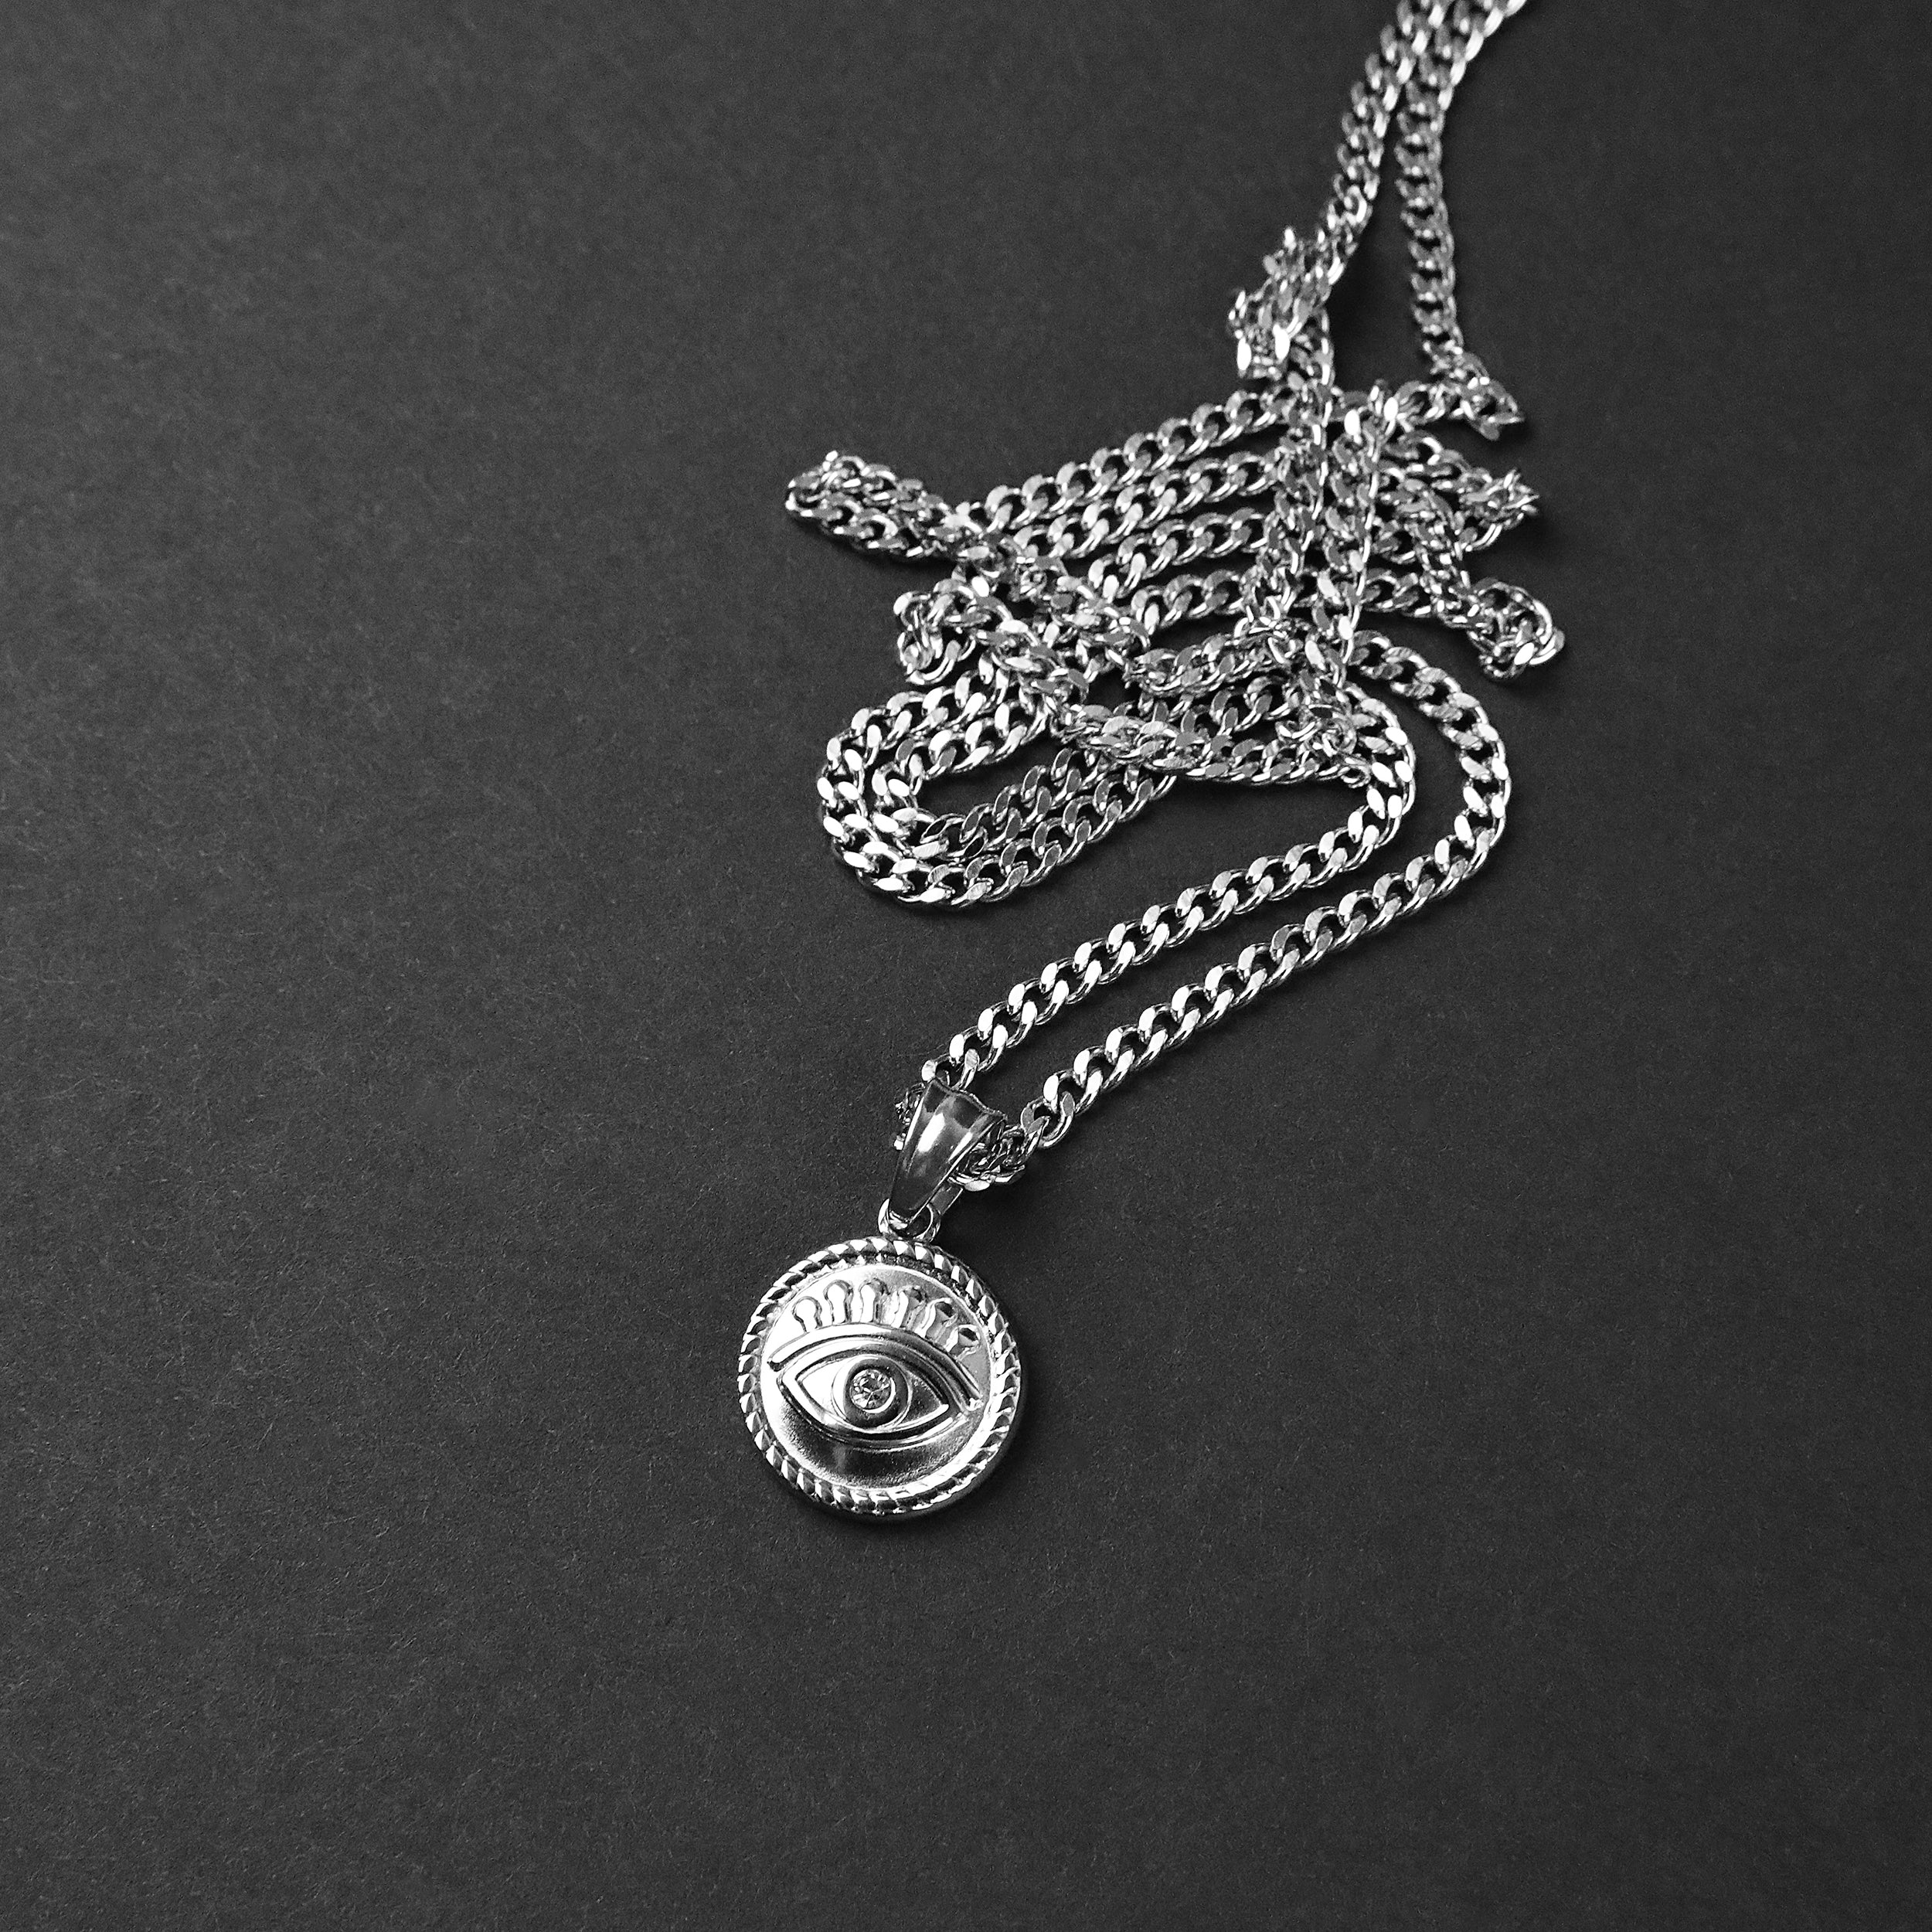 MENDEL Mens Womens Boy Buddhist Lucky Protection Amulet Pendant Necklace  For Men | eBay